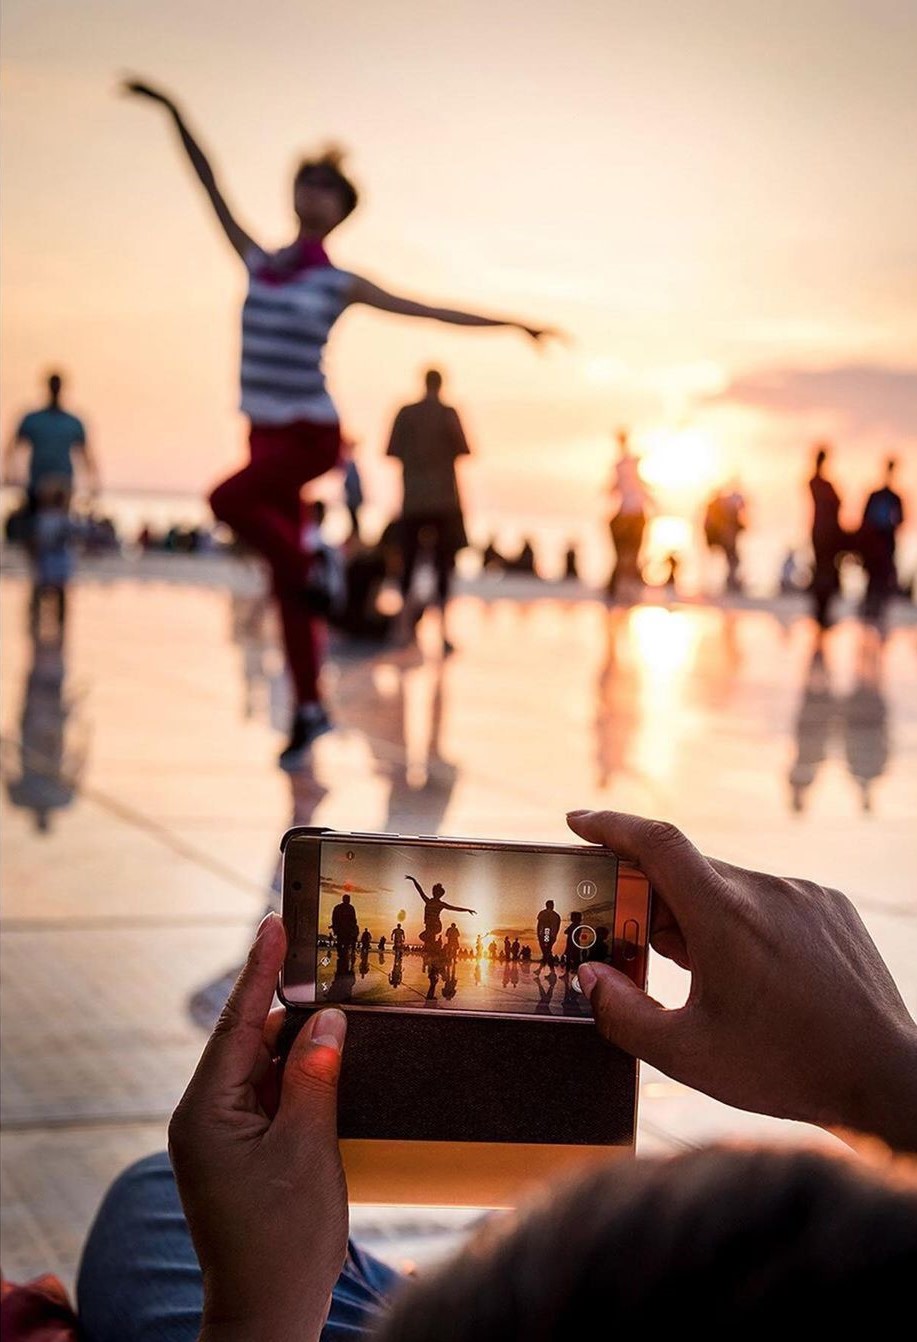 Things to do in Zadar - Sunset Zadar dance phone promenade